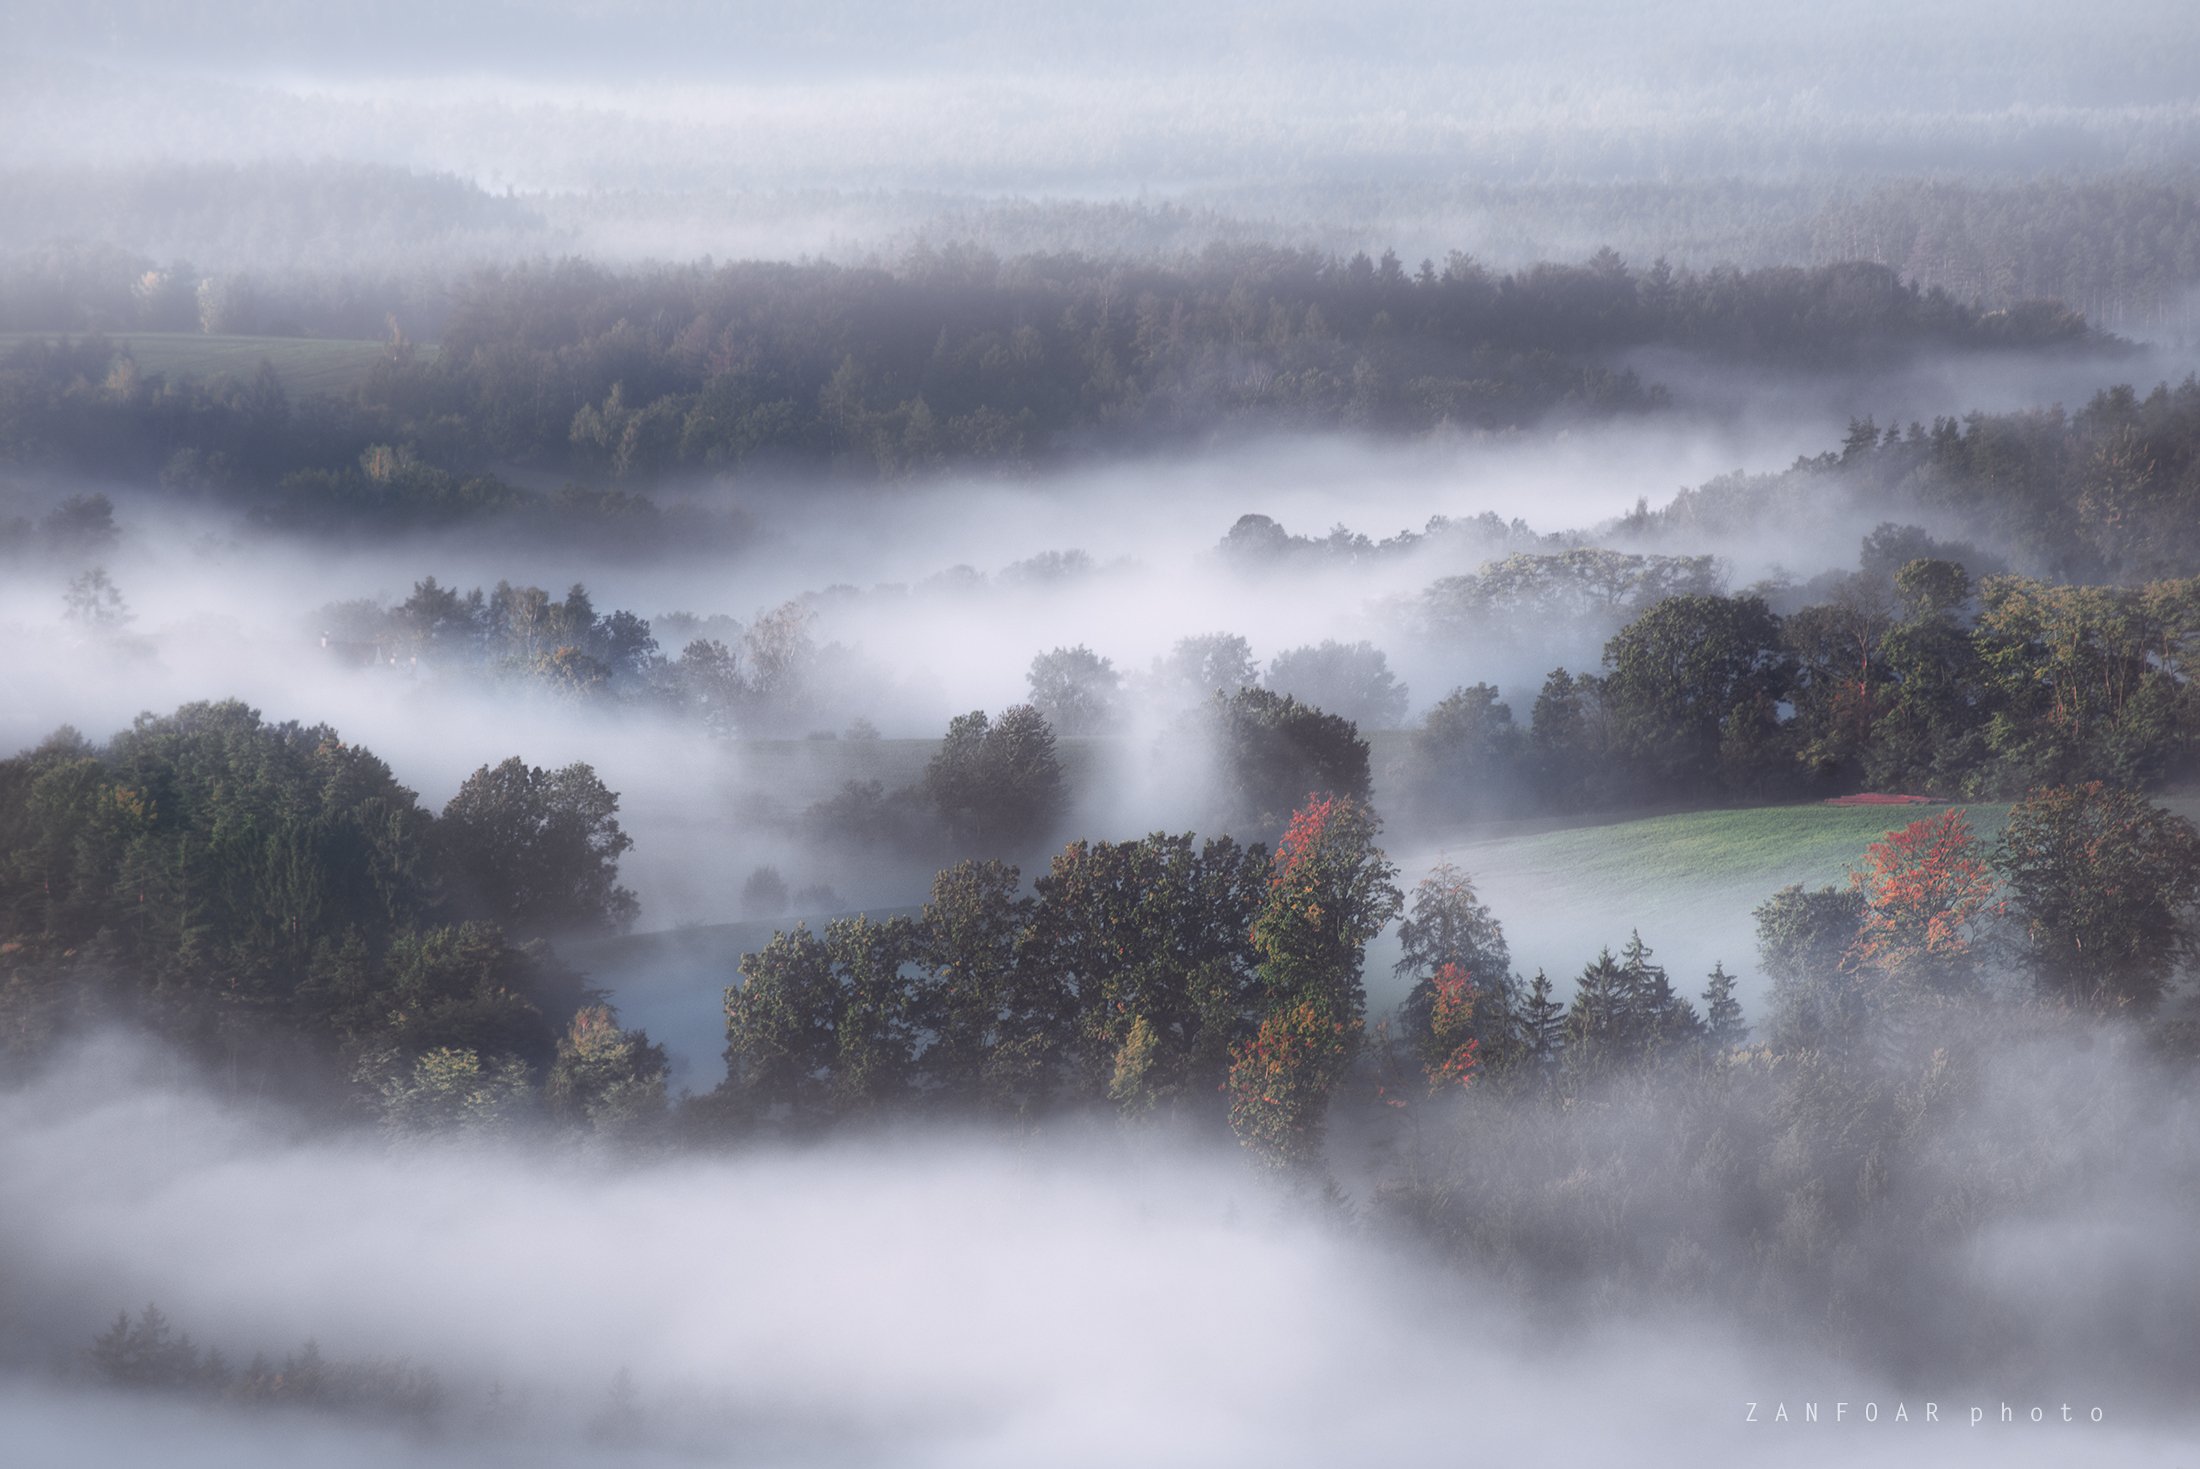 долина, начало осени, скользящий туман,nikon d750zanfoar,чешская республика,bohemia,moravia,чехия,  Zanfoar